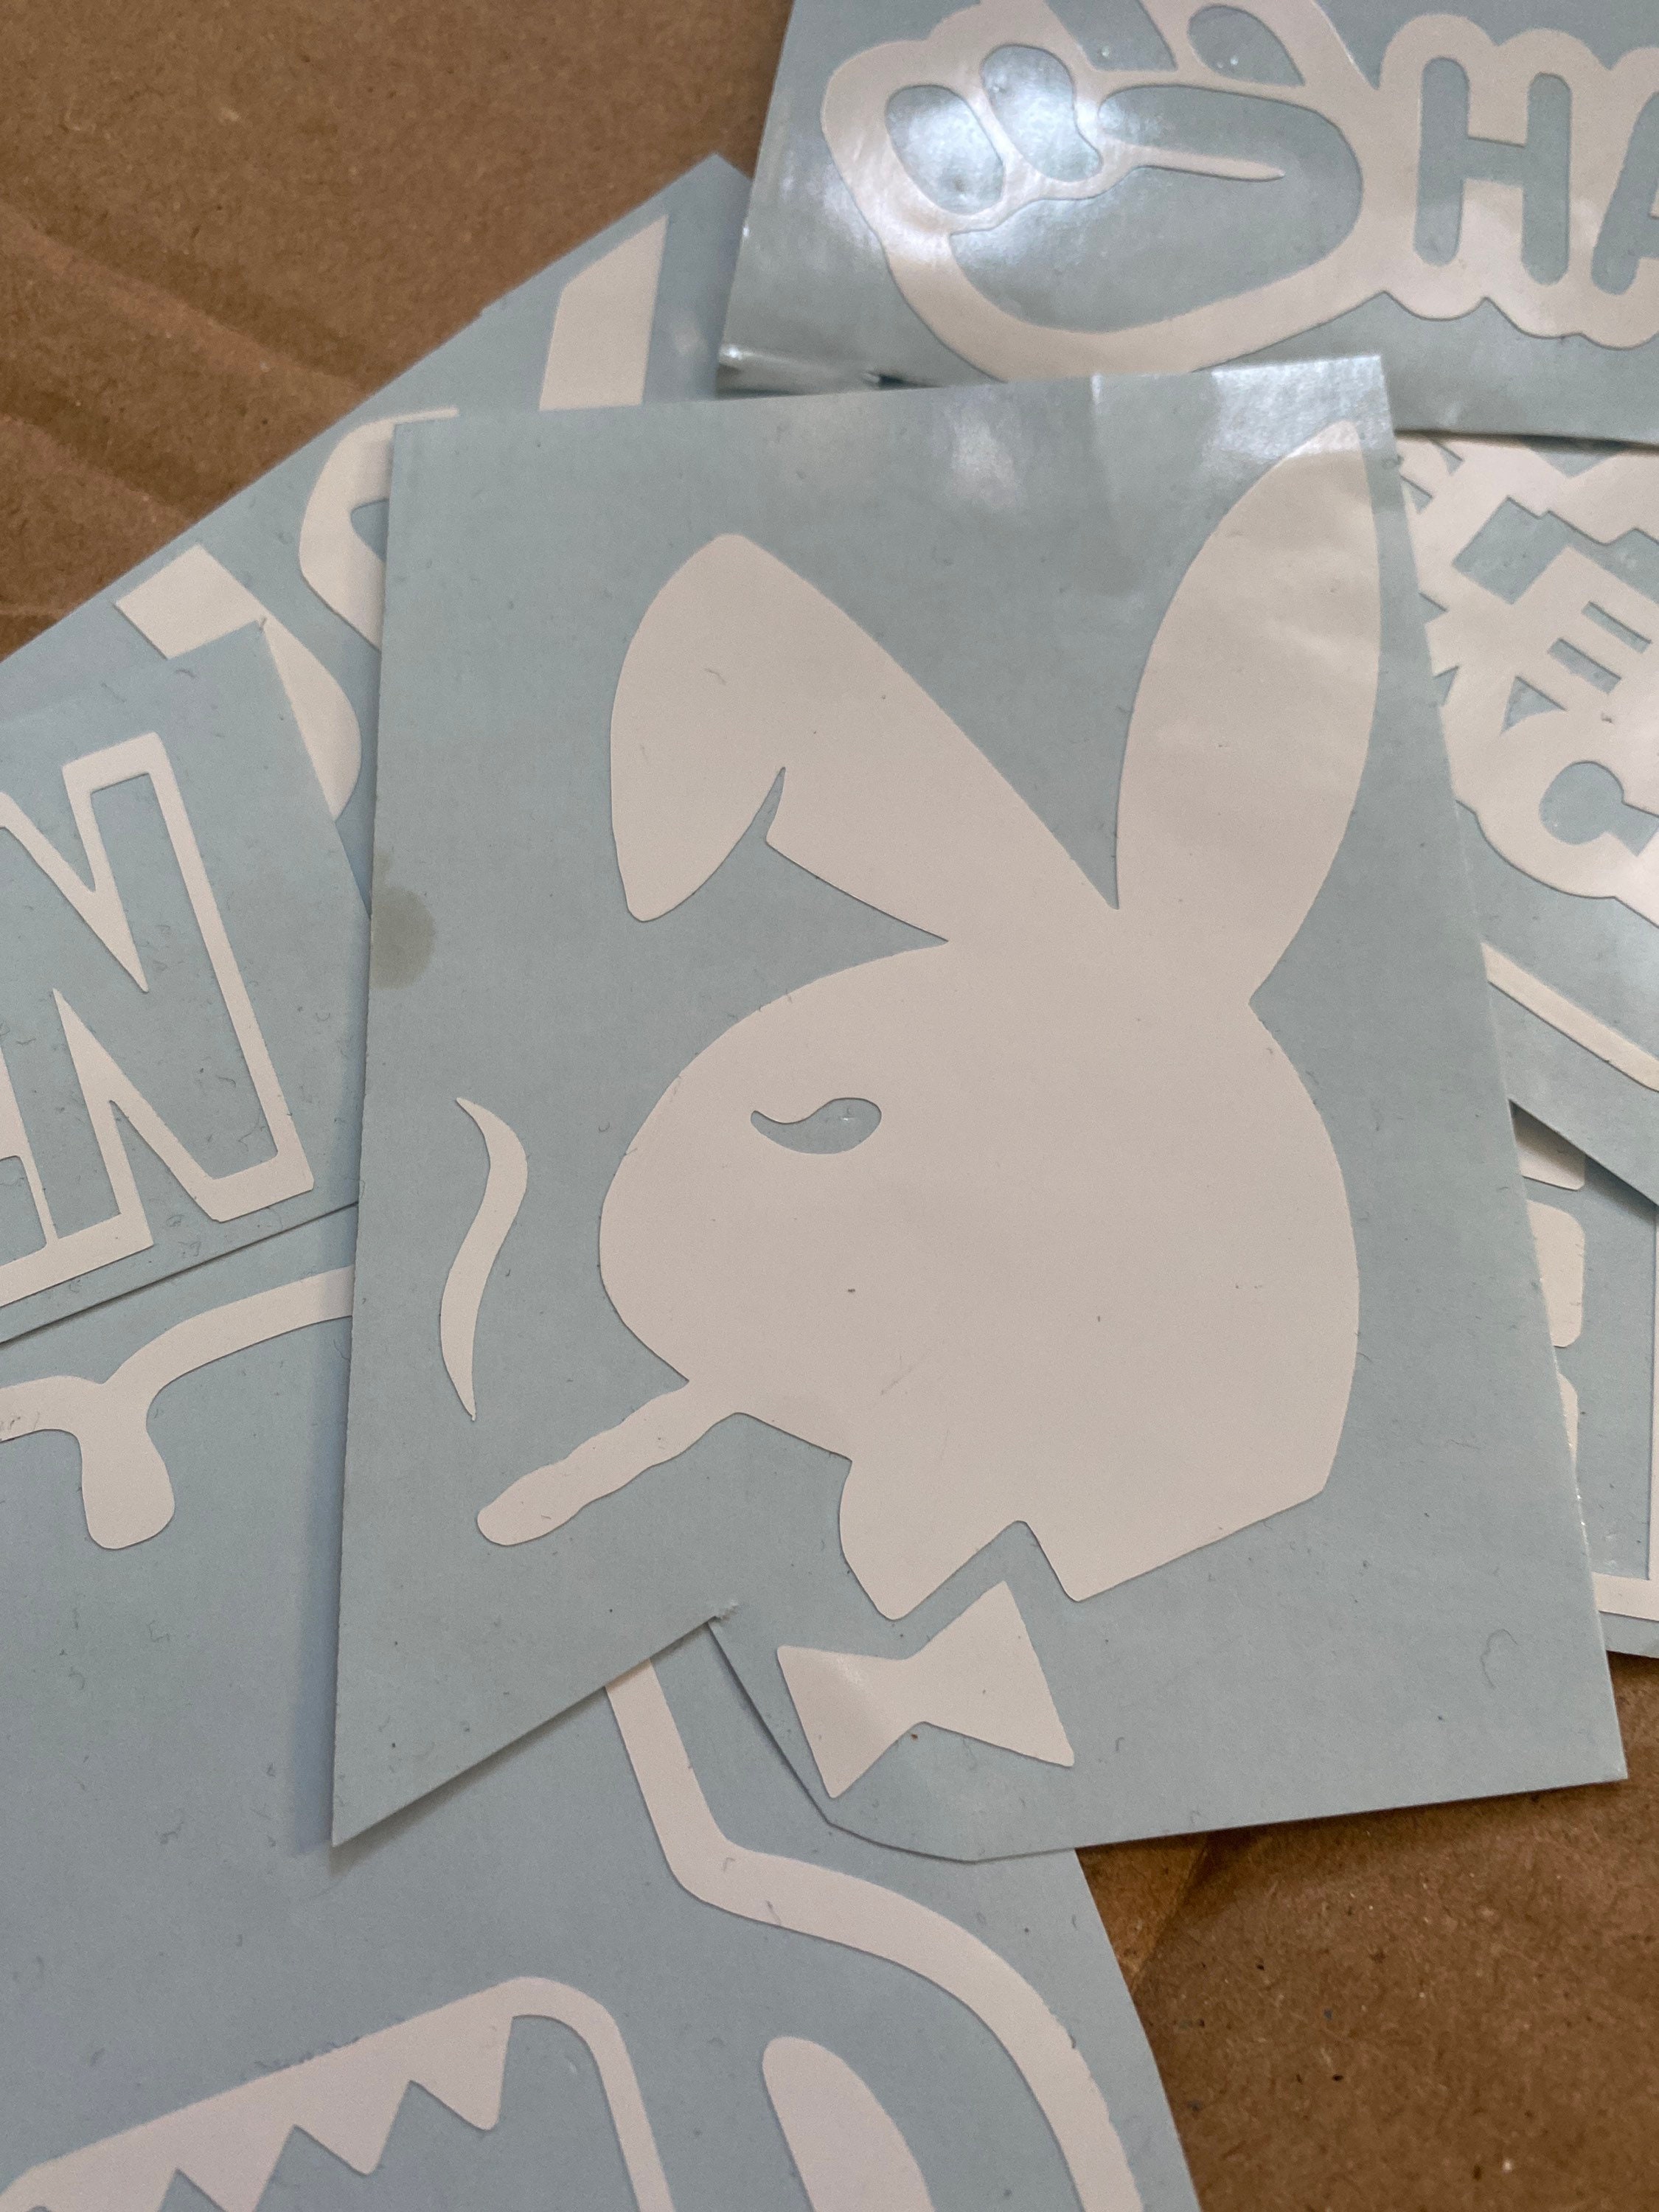 420 Fanatics - Glow in the dark Playboy bunny with LV design